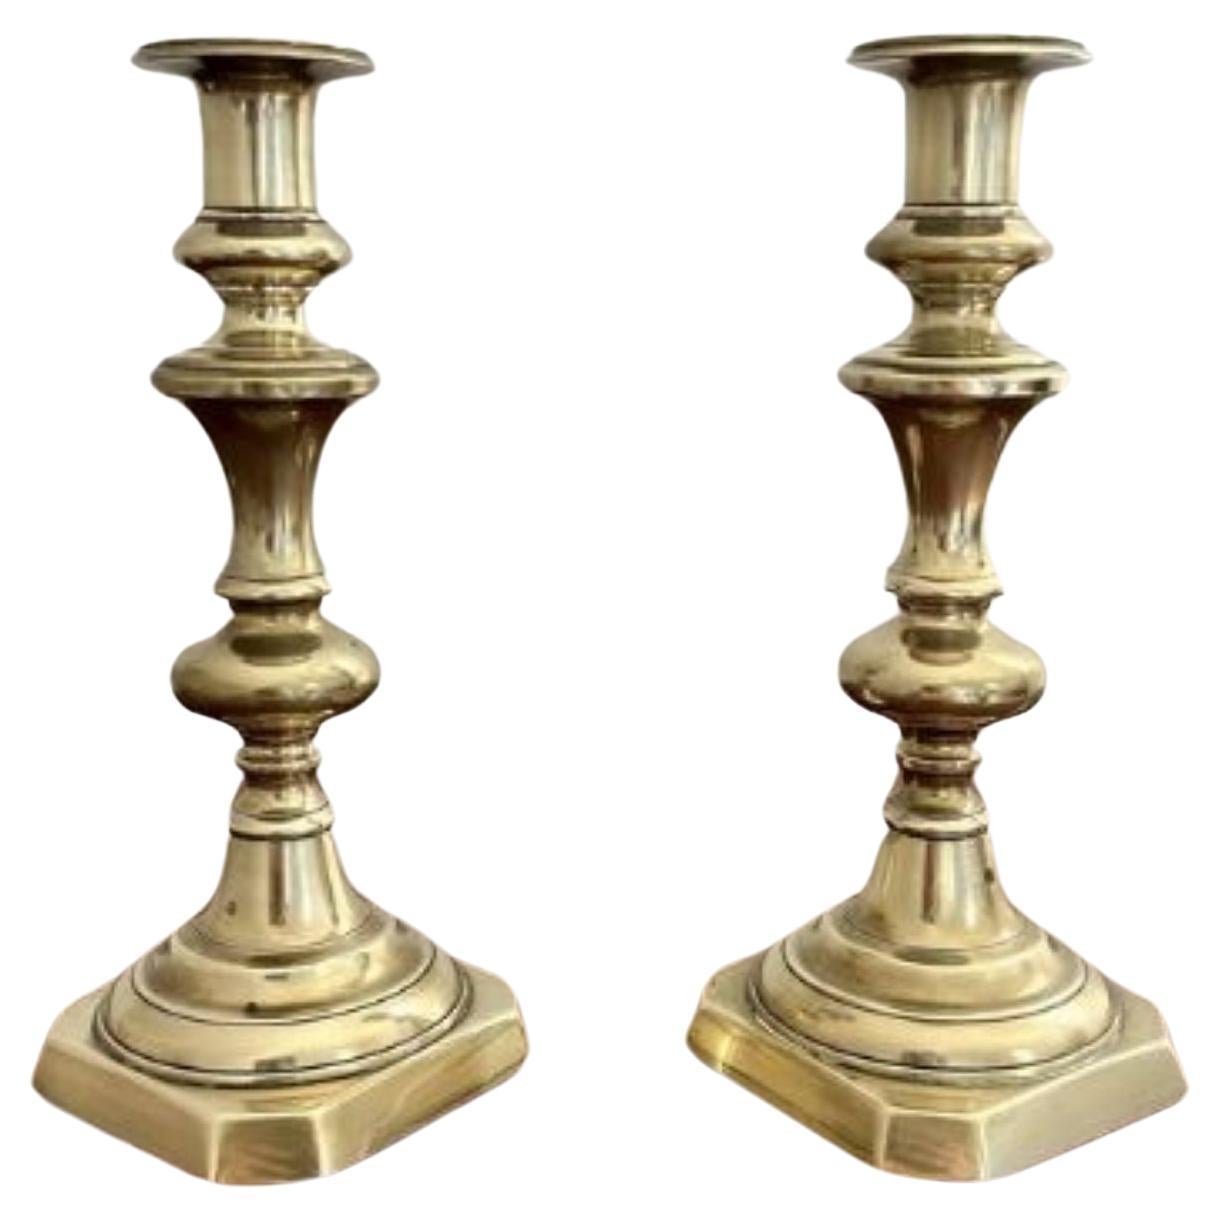 Pair of antique Victorian brass candlesticks